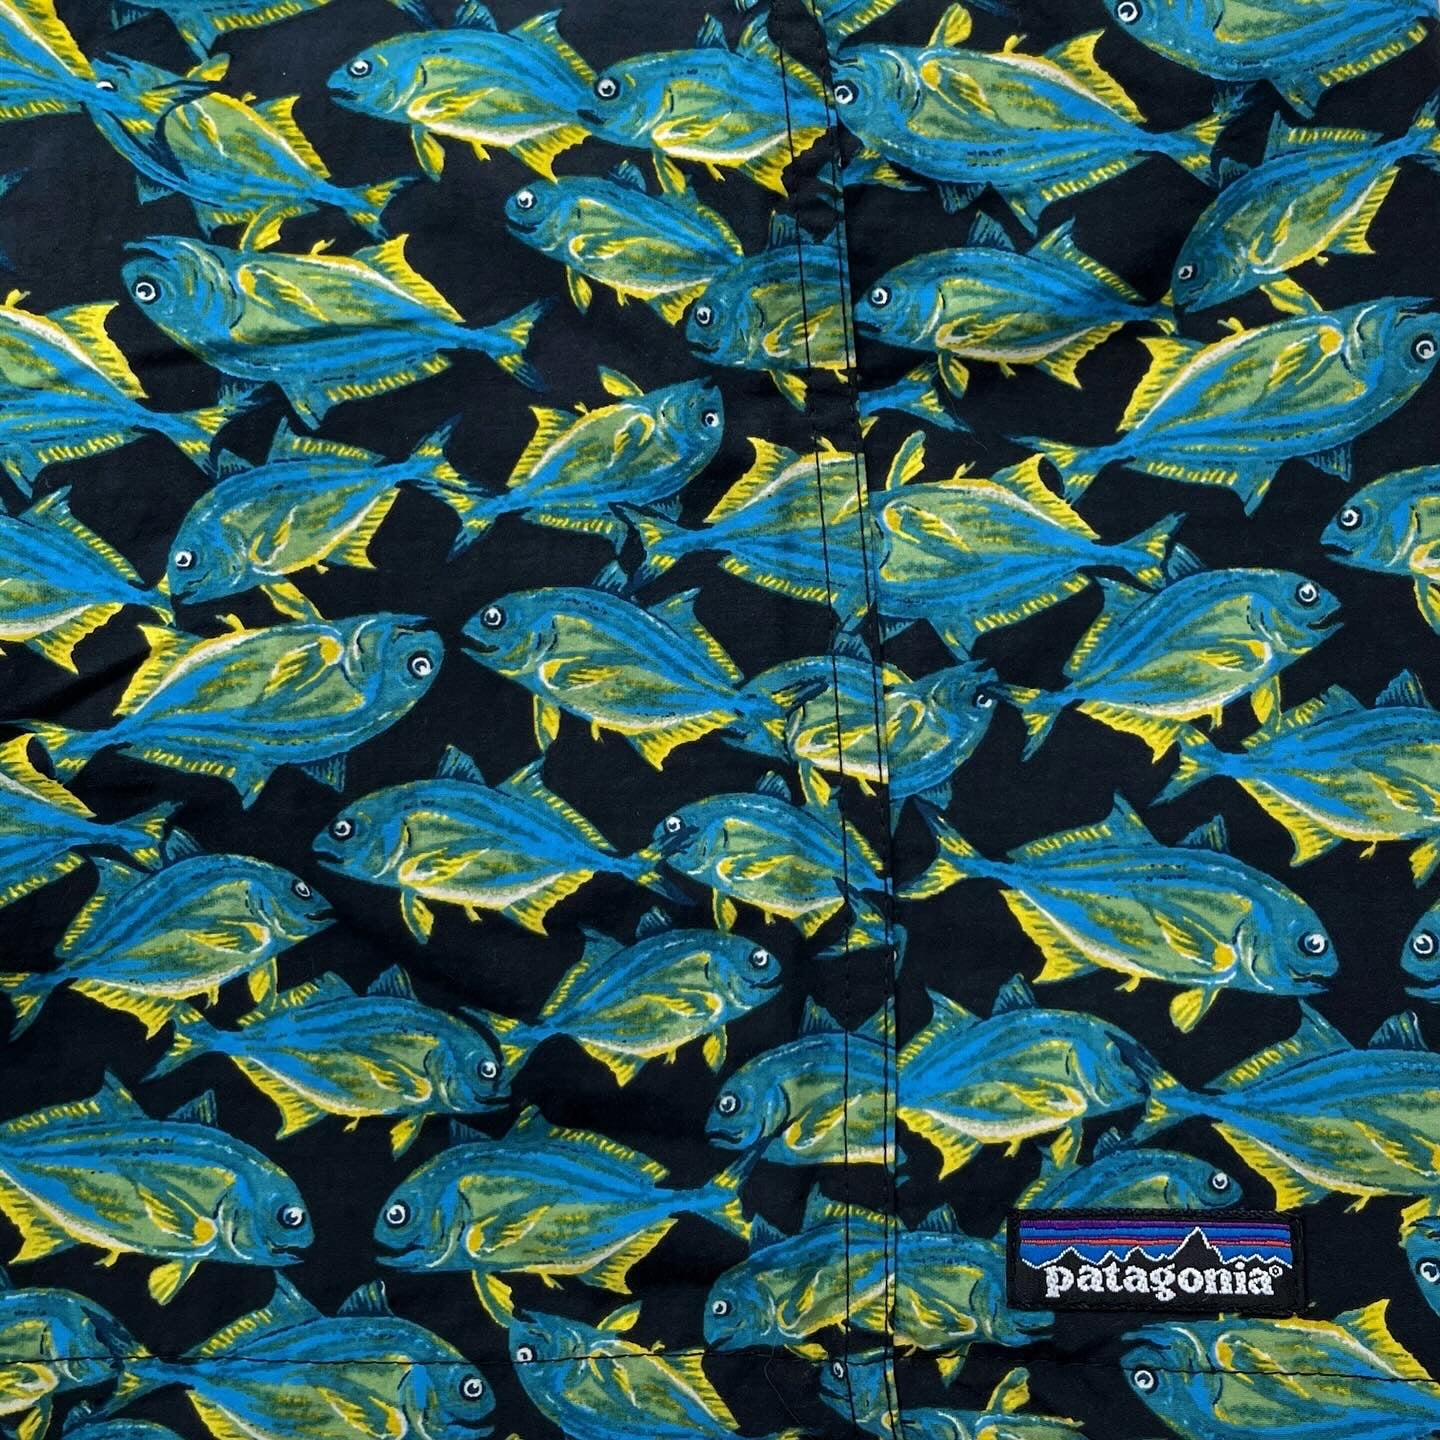 2000 Patagonia Mens 5” Printed Nylon River Shorts, Fish: Black (M)